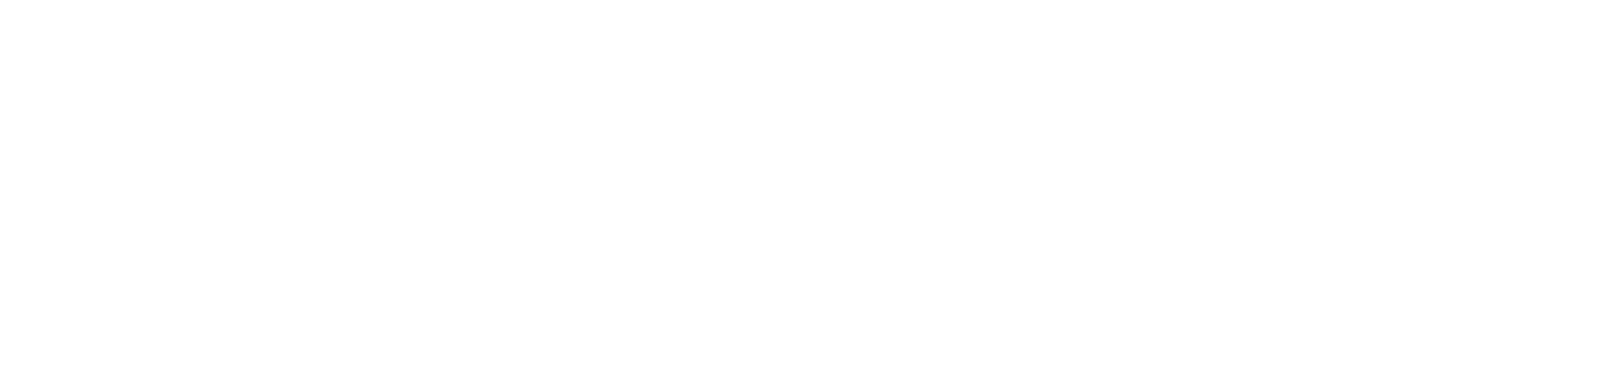 Deutsch-Chinesische Gesellschaft for Medizin e.V.